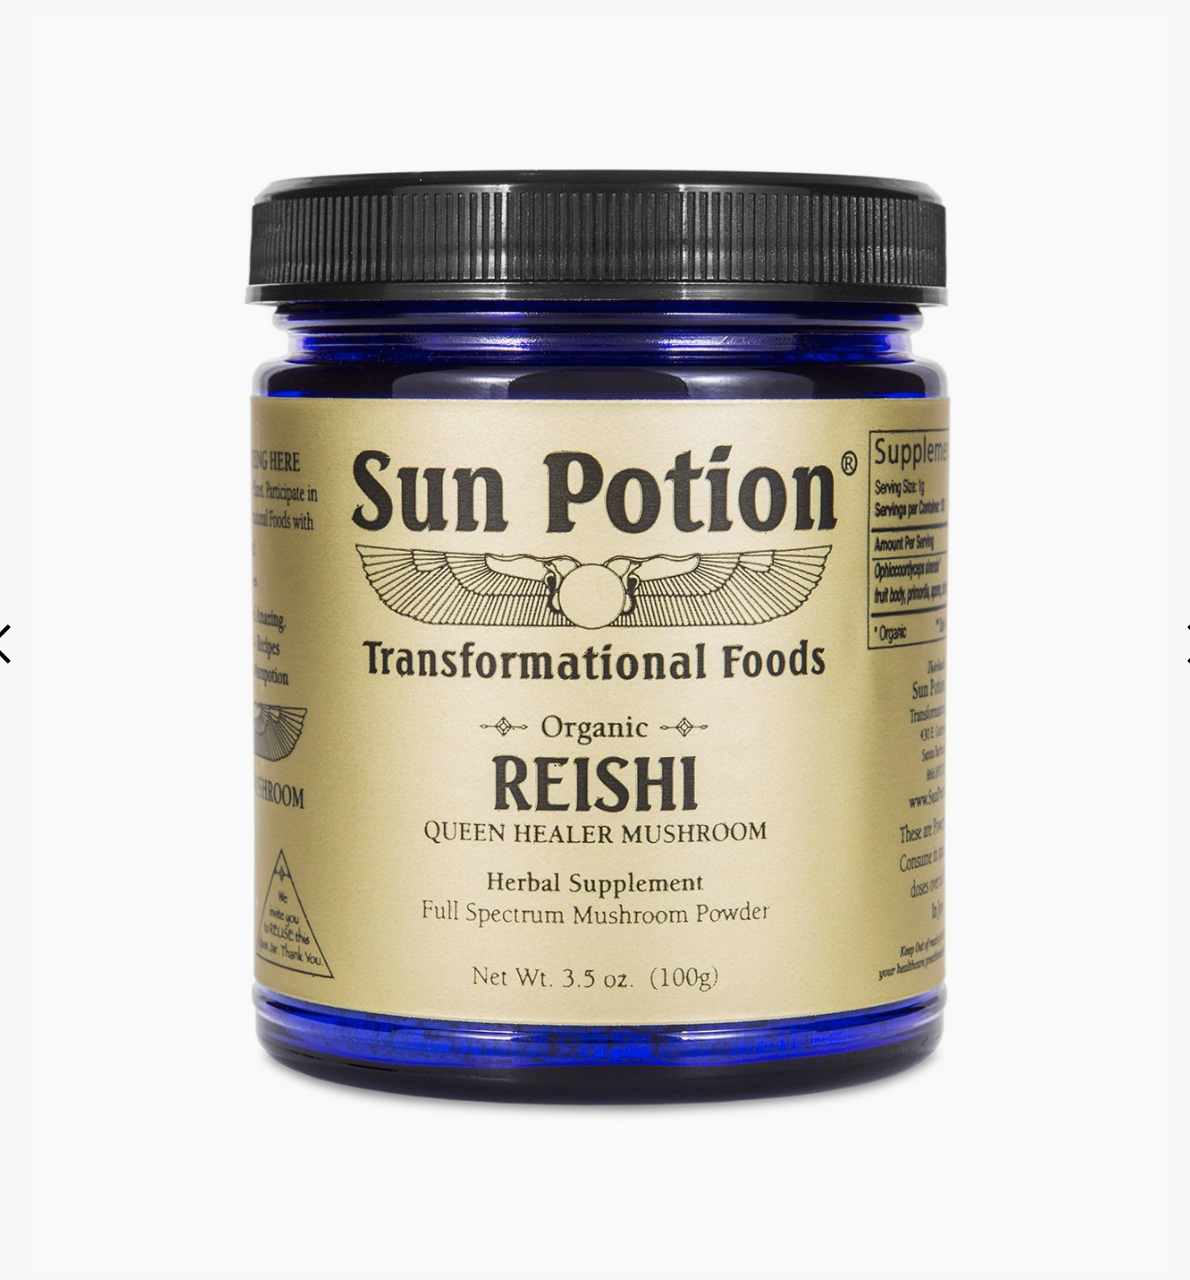 Sun Potion Reishi